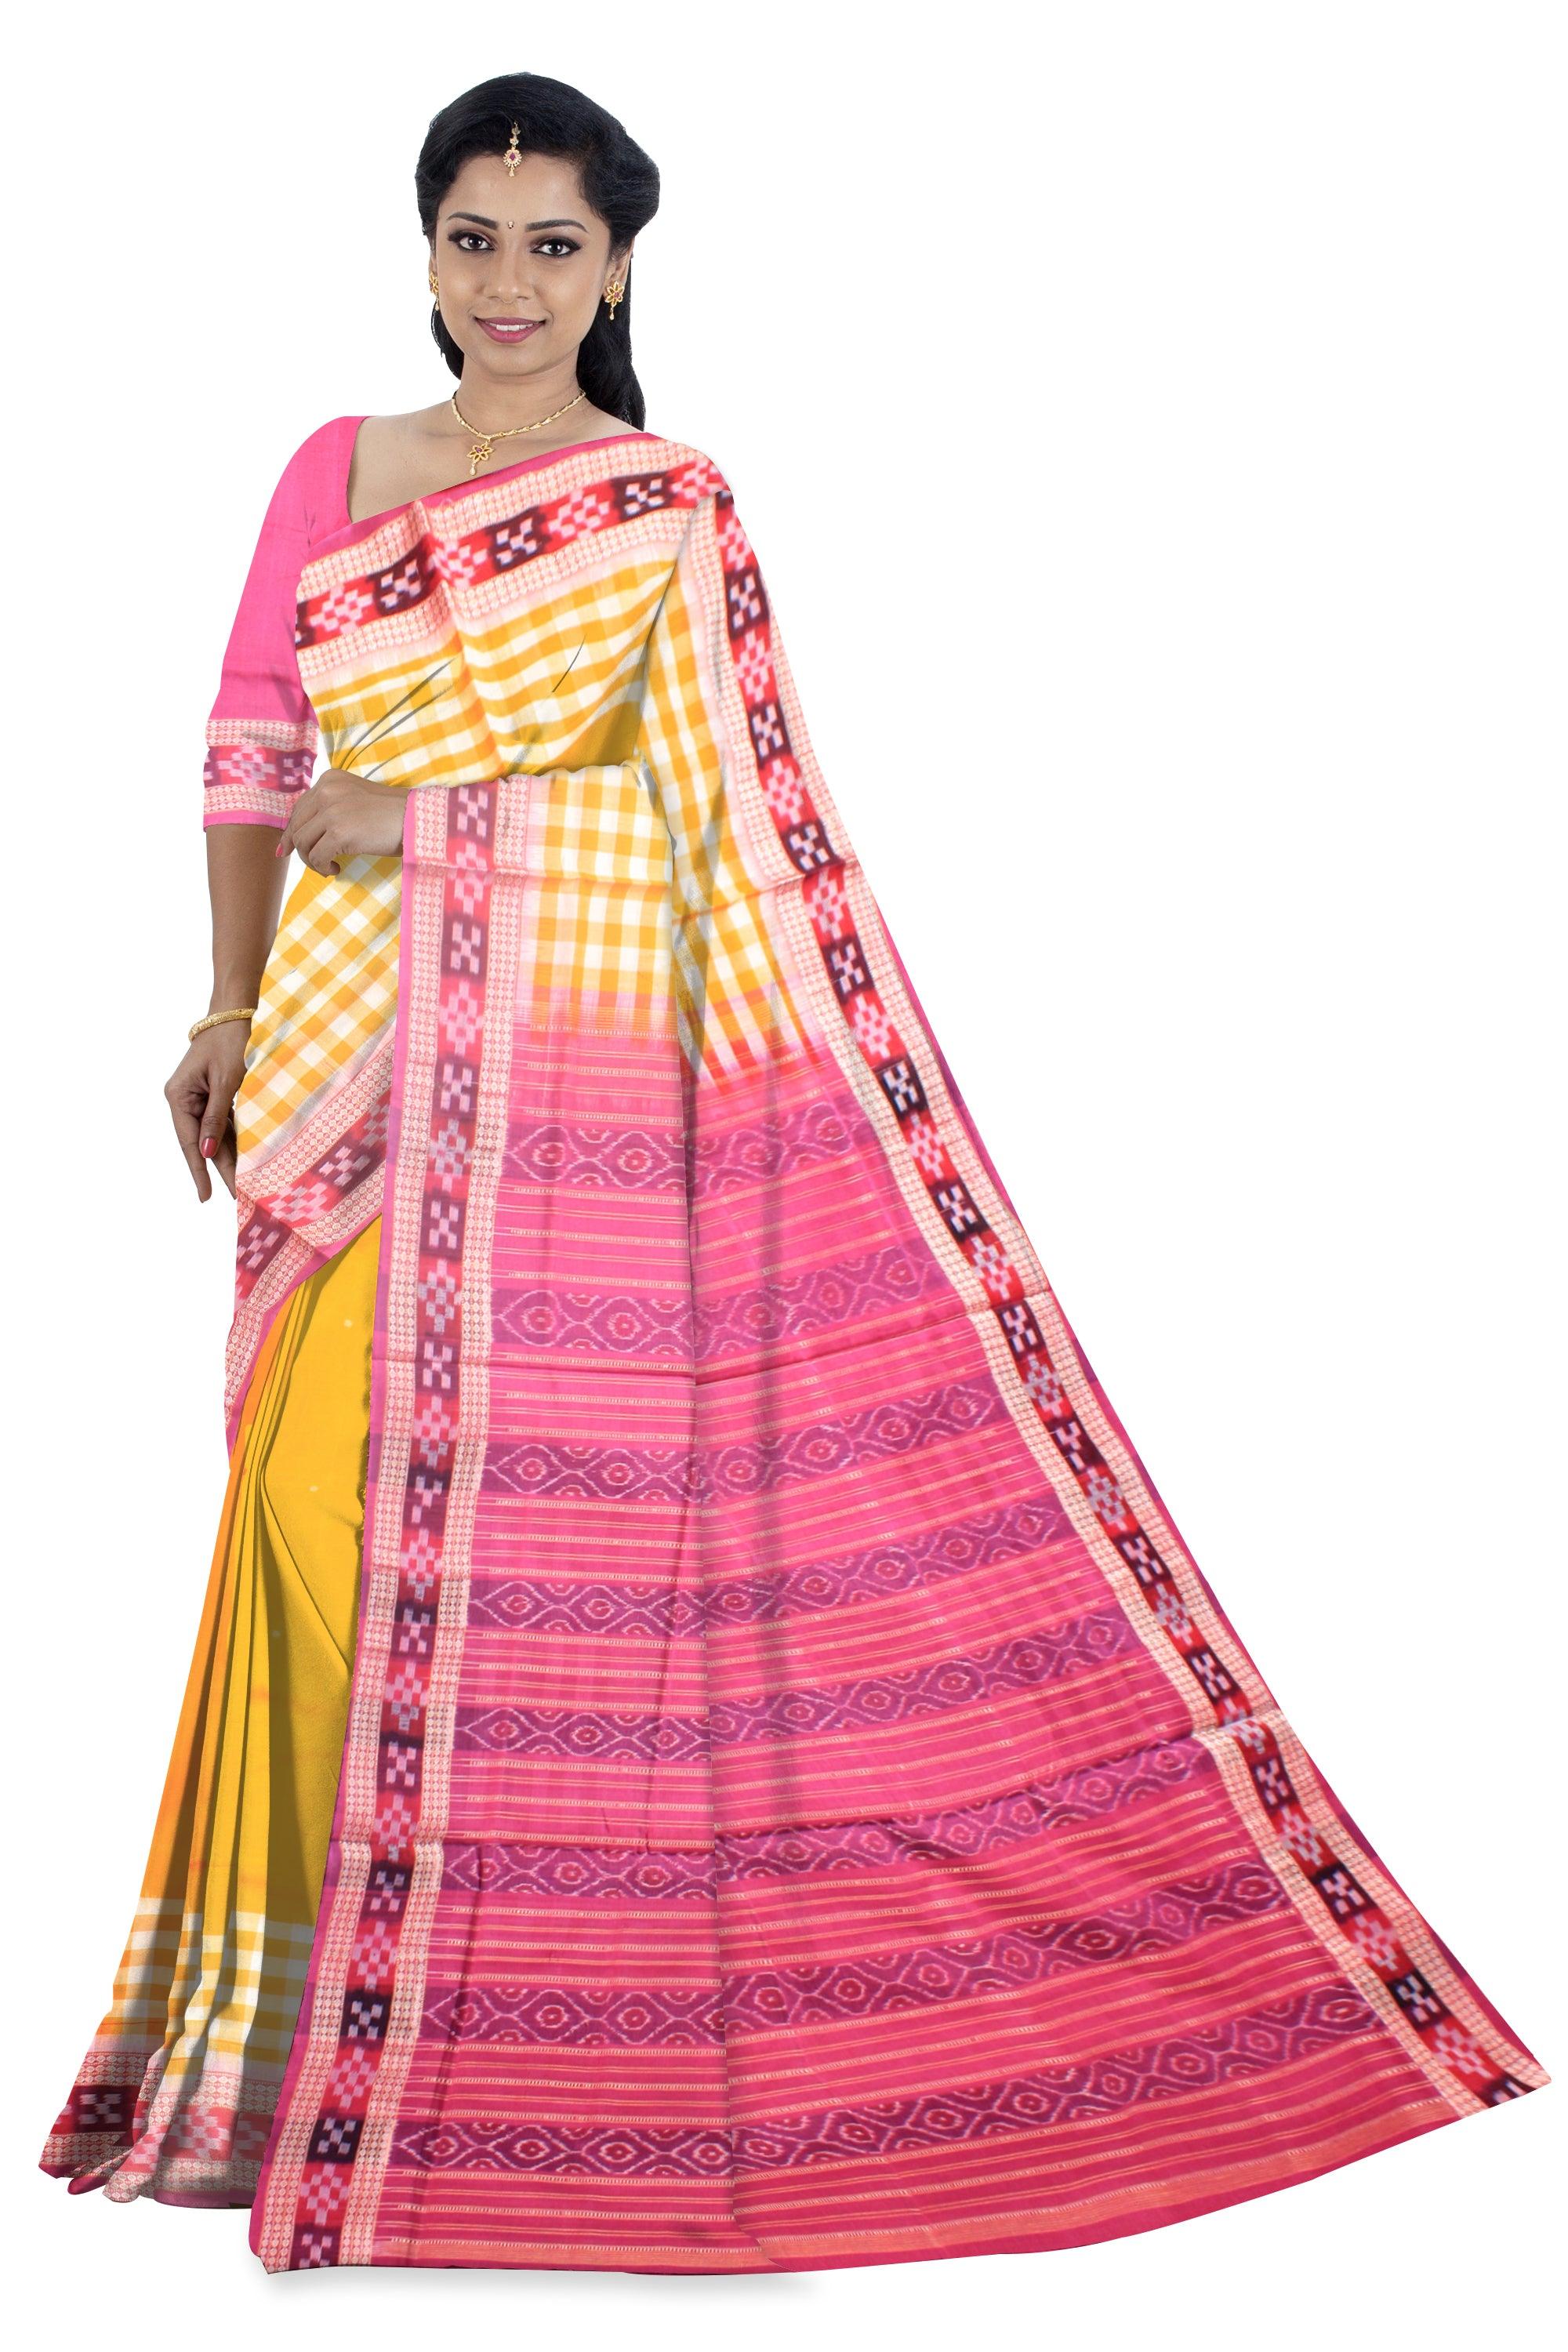 Sambalpuri dhadi sapta cotton saree in yellow and pink color,with available blouse piece. - Koshali Arts & Crafts Enterprise